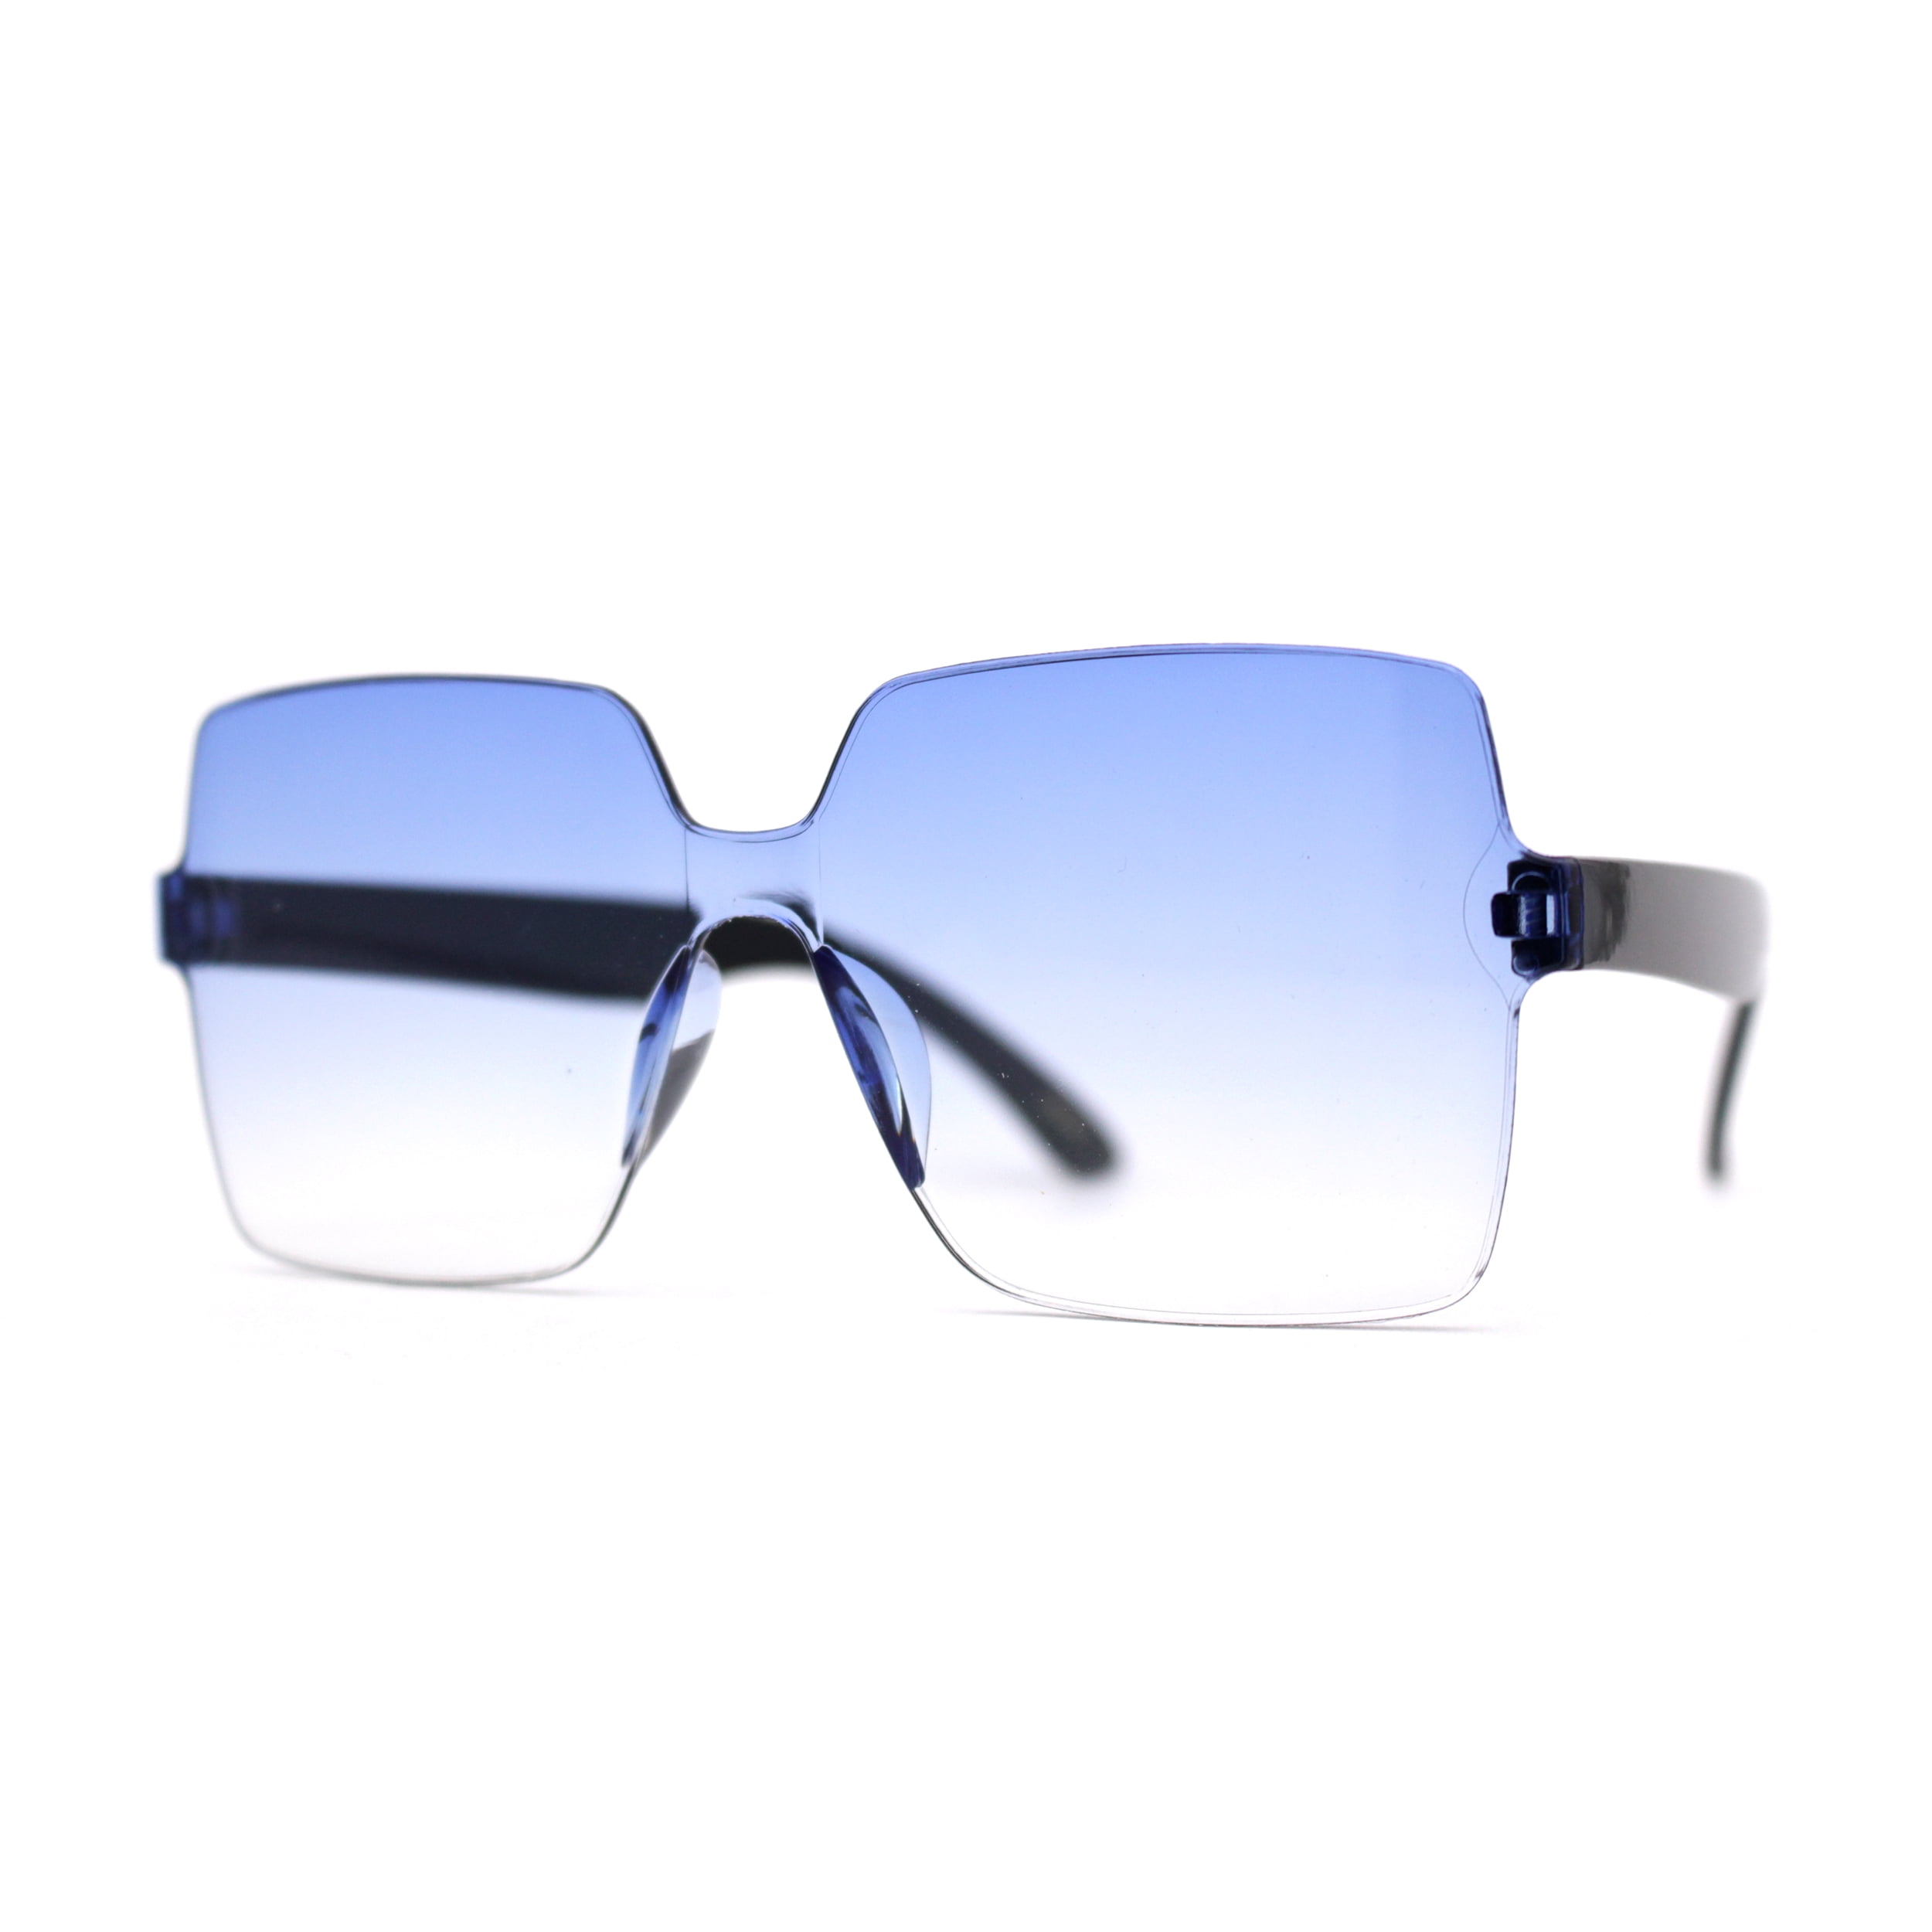 Girls Child Size Elegant Minimal Shield Rectangle Butterfly Sunglasses 